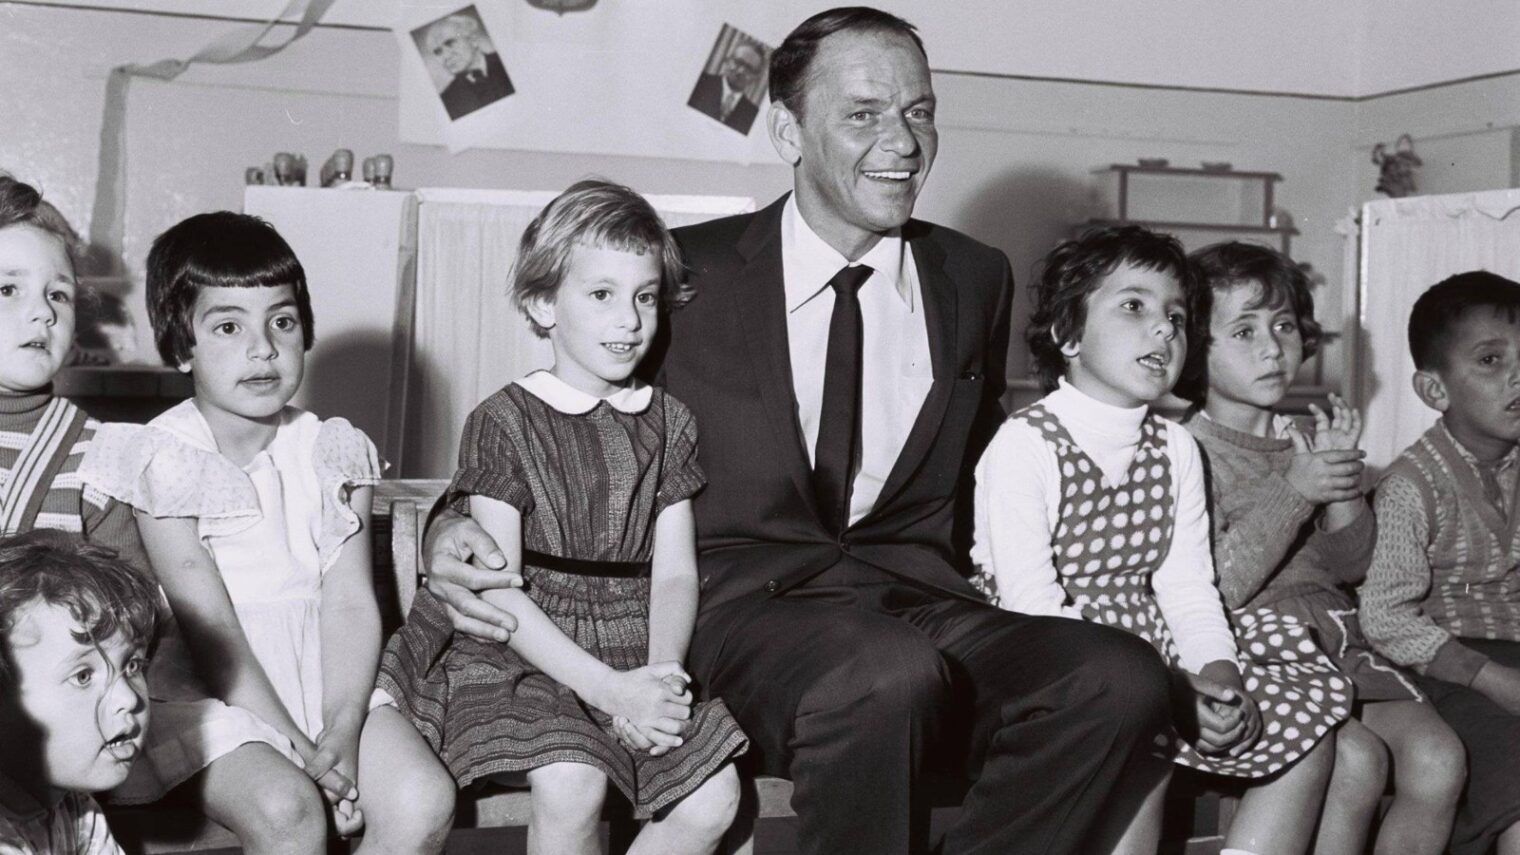 Frank Sinatra visiting a kindergarten in Nazareth Illit, 1962. Photo by GPO